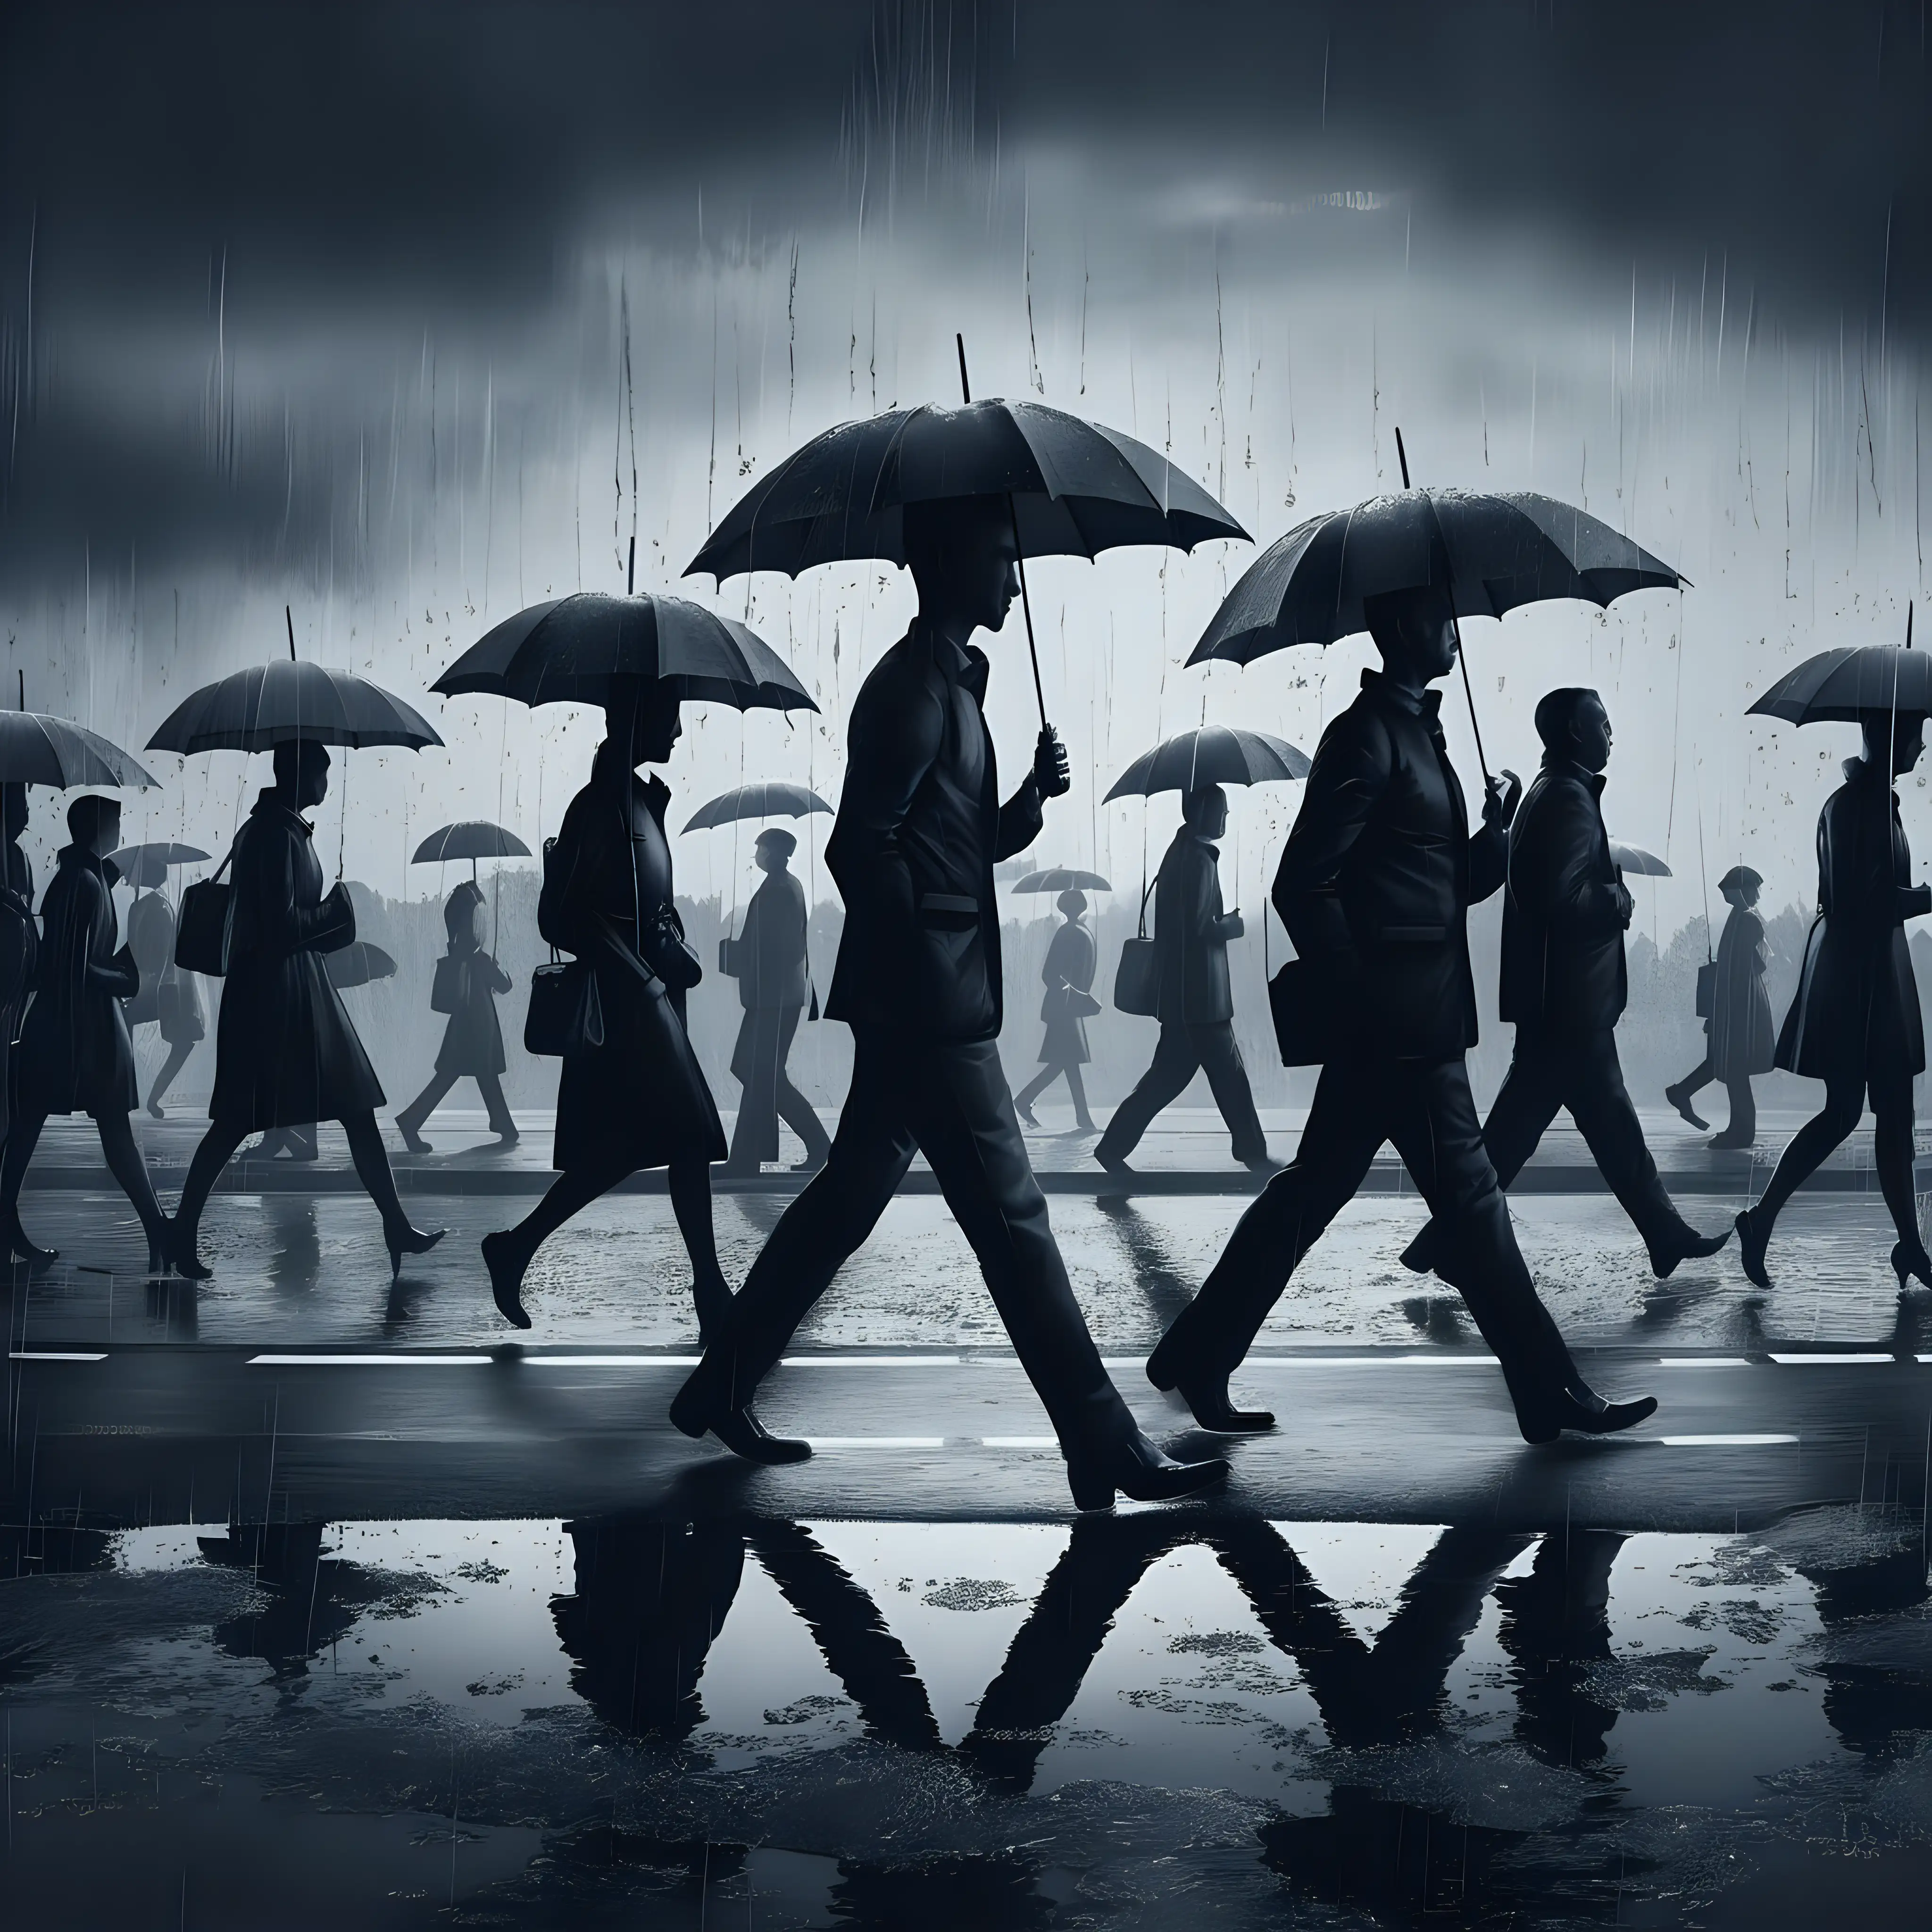 Silhouette People Walking with Umbrellas in Urban Setting